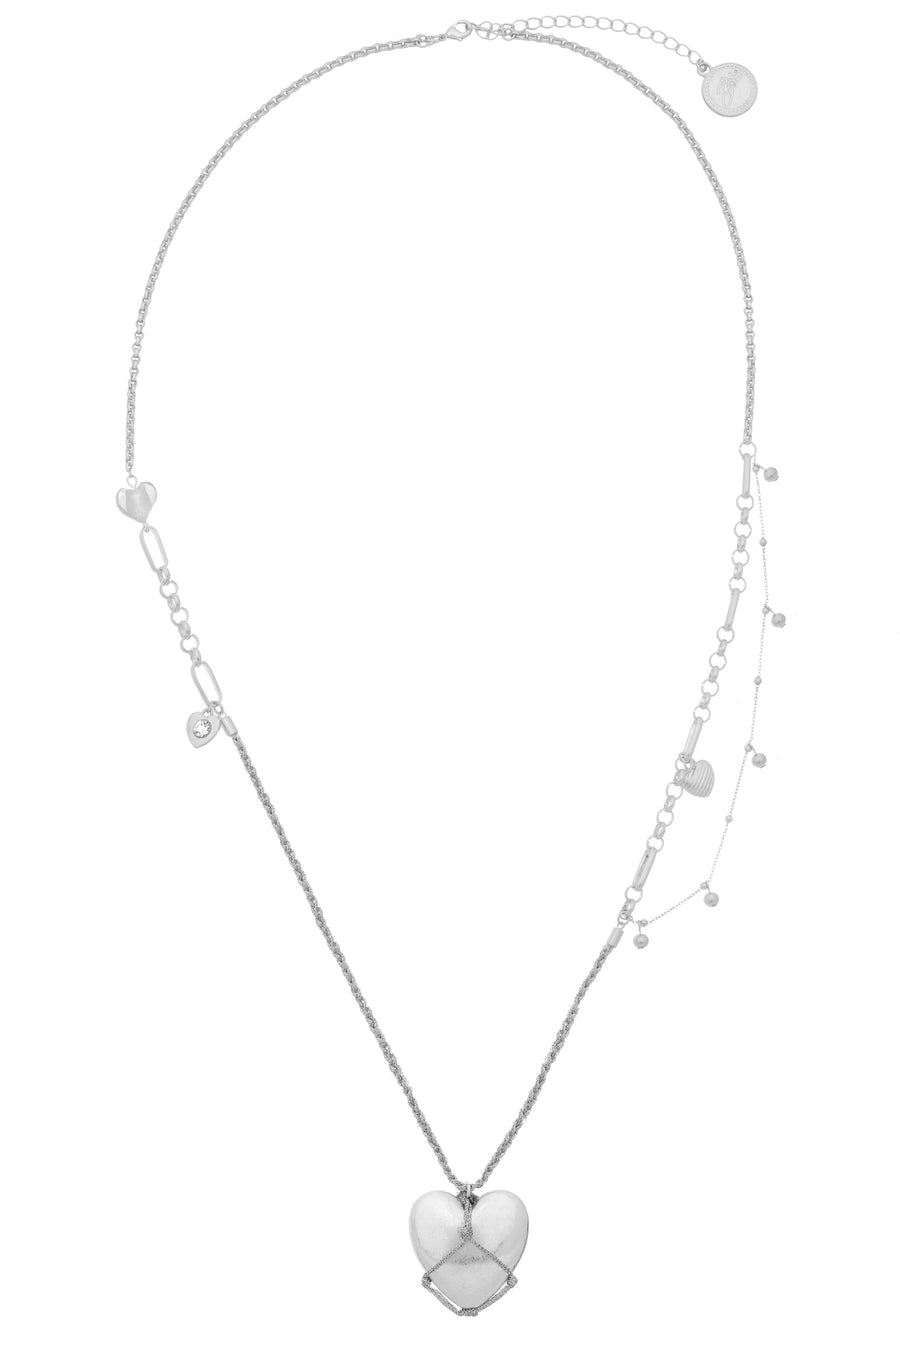 Bibi Bijoux Silver Puffed Heart Necklace